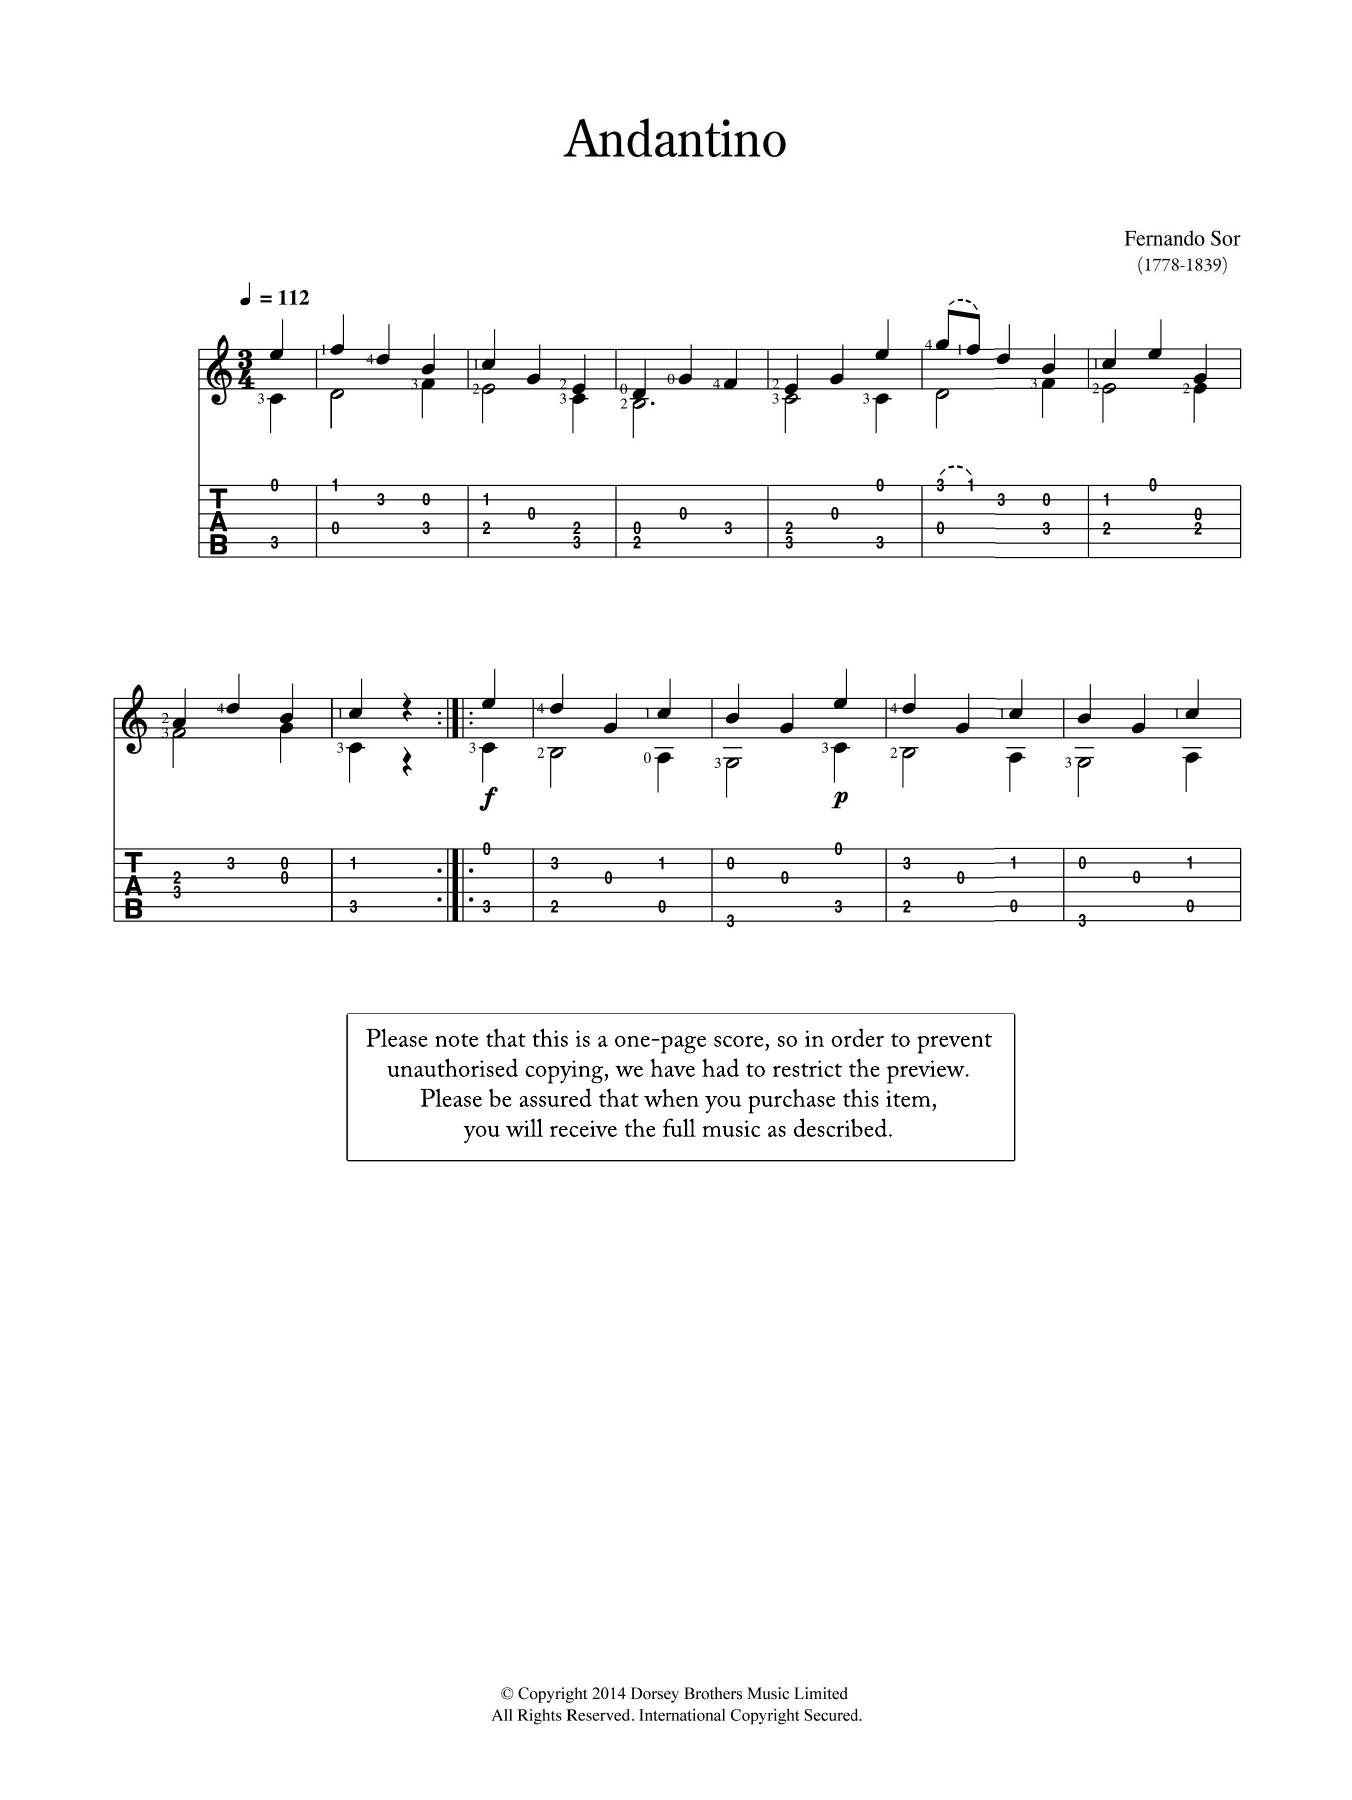 Fernando Sor Andantino Sheet Music Notes & Chords for Guitar - Download or Print PDF